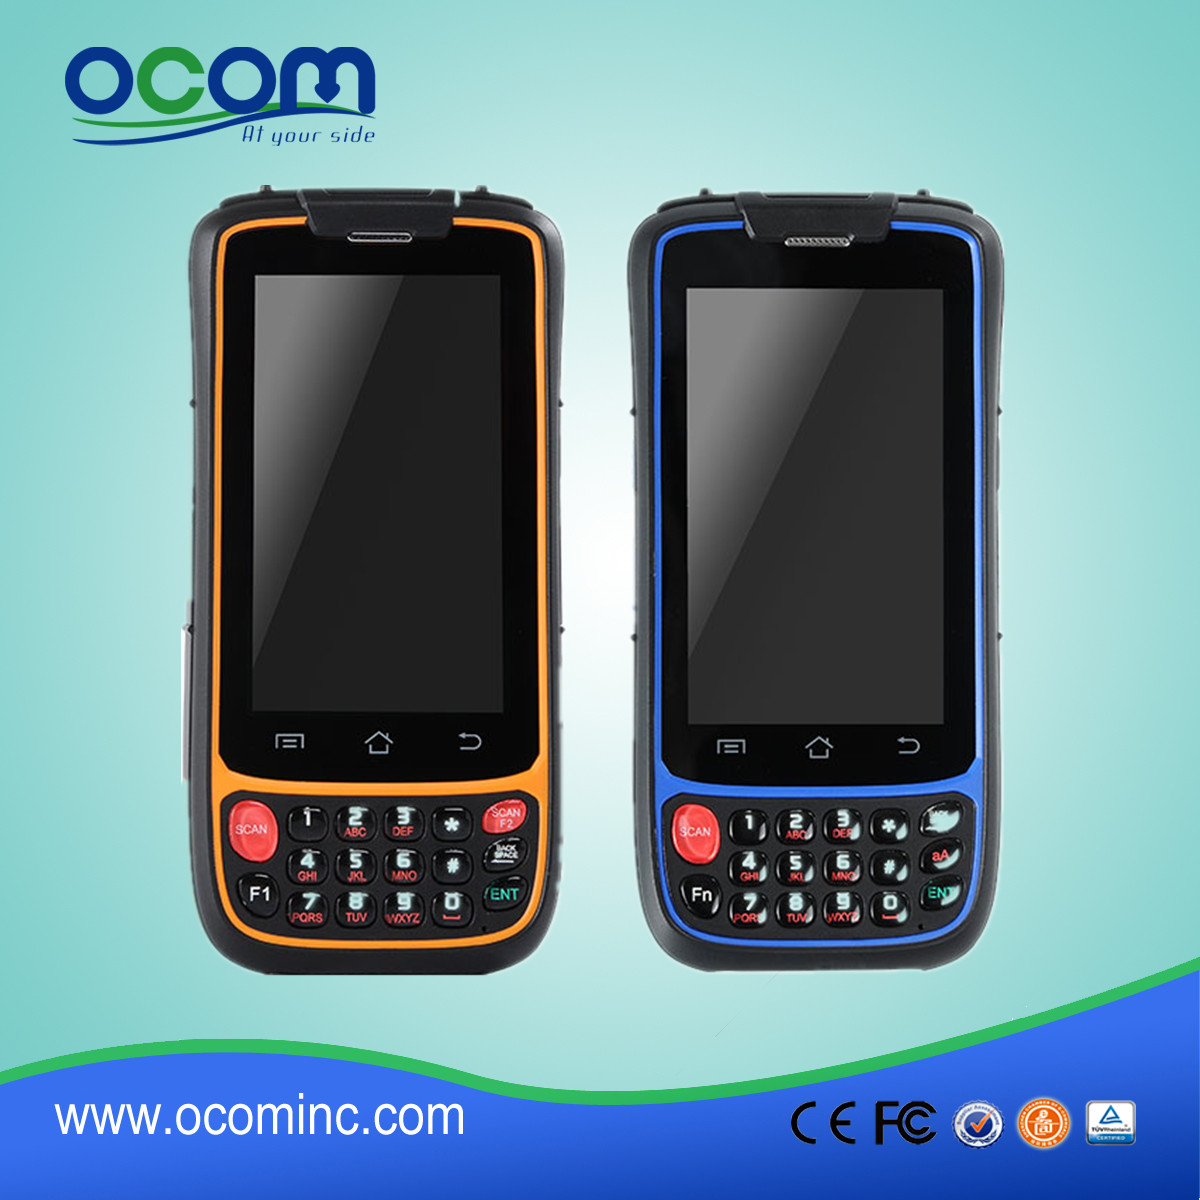 OCBS-D7000 --- China qualitativ hochwertige Handy Industrie-PDA android